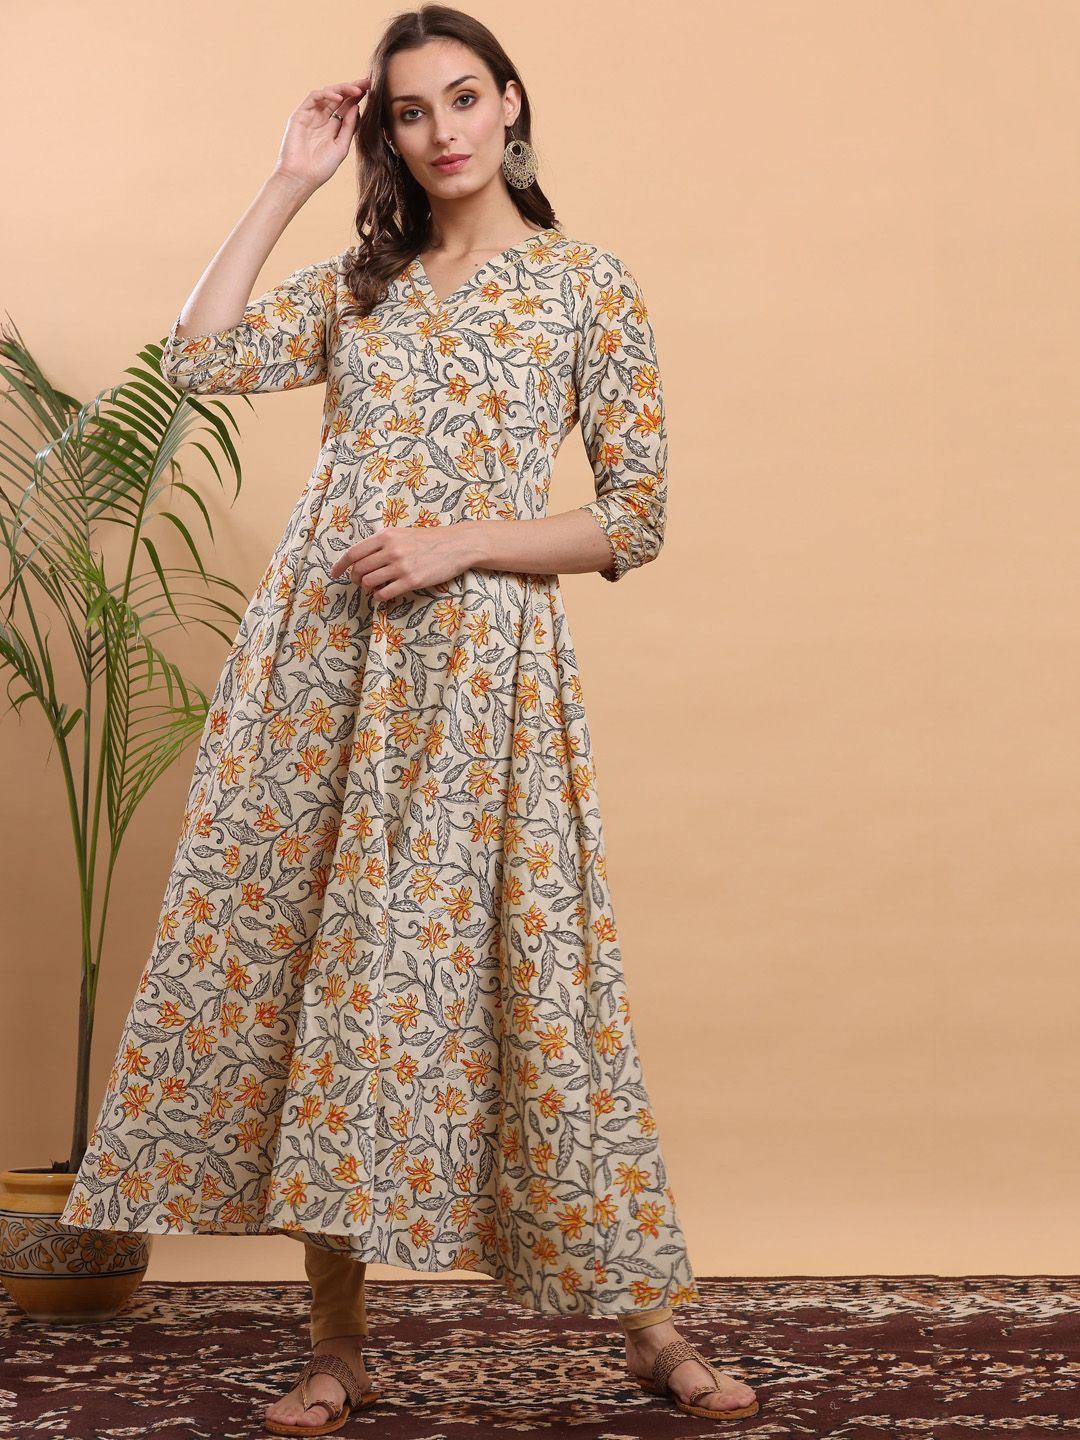 kaanchie nanggia women floral printed ethnic dresses